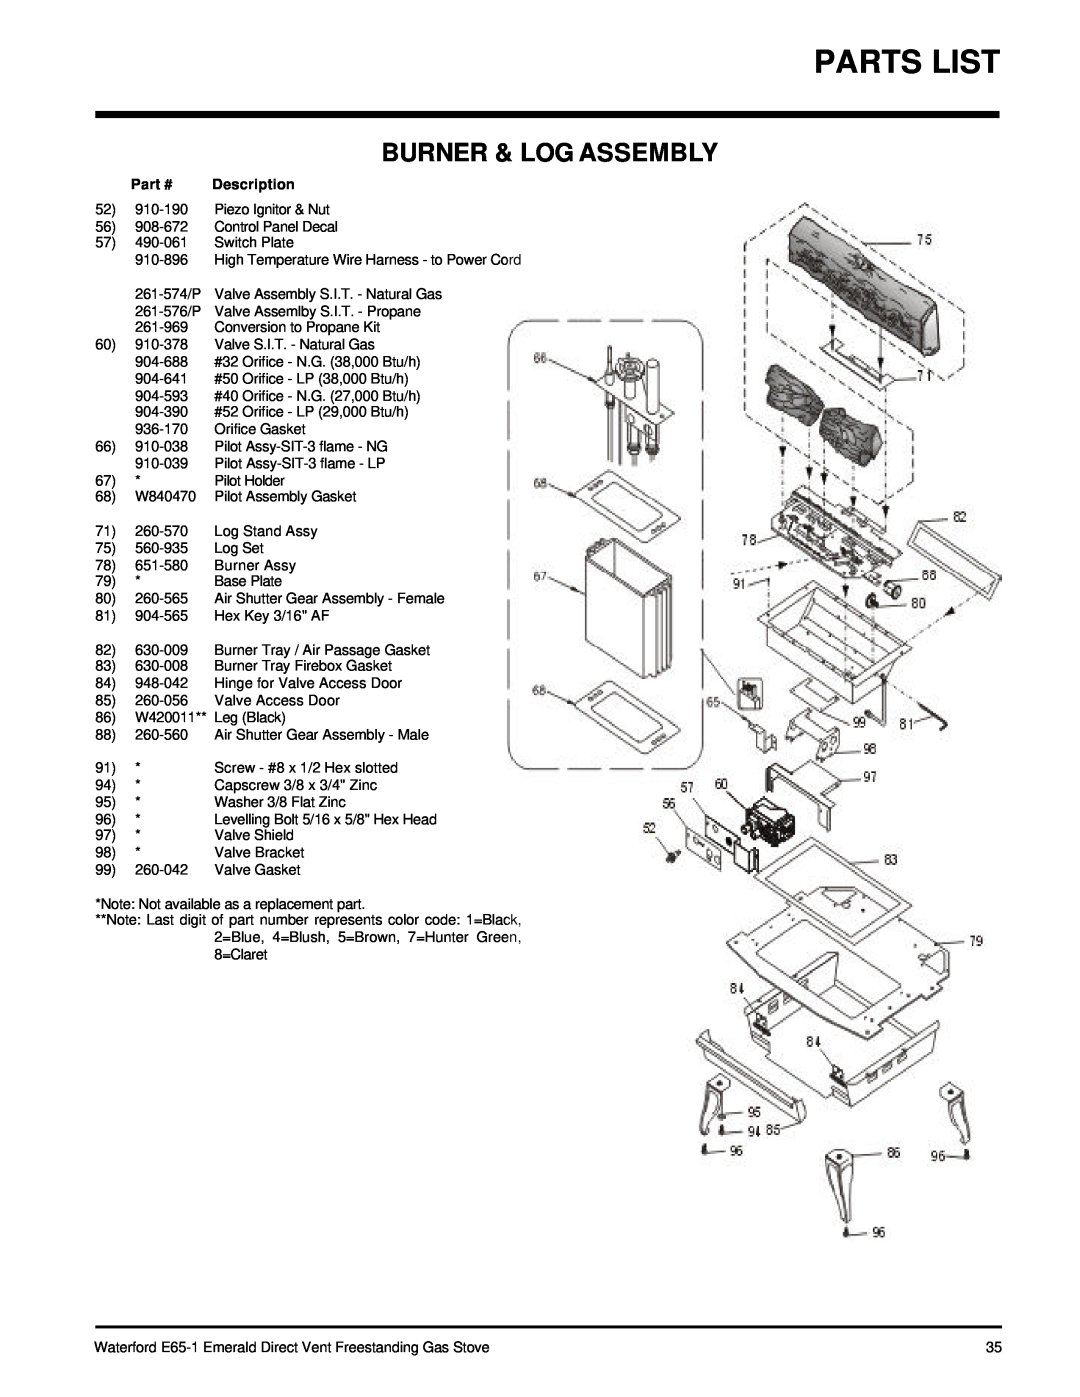 Waterford Appliances E65-LP1, E65-NG1 installation manual Burner & Log Assembly, Part # Description 